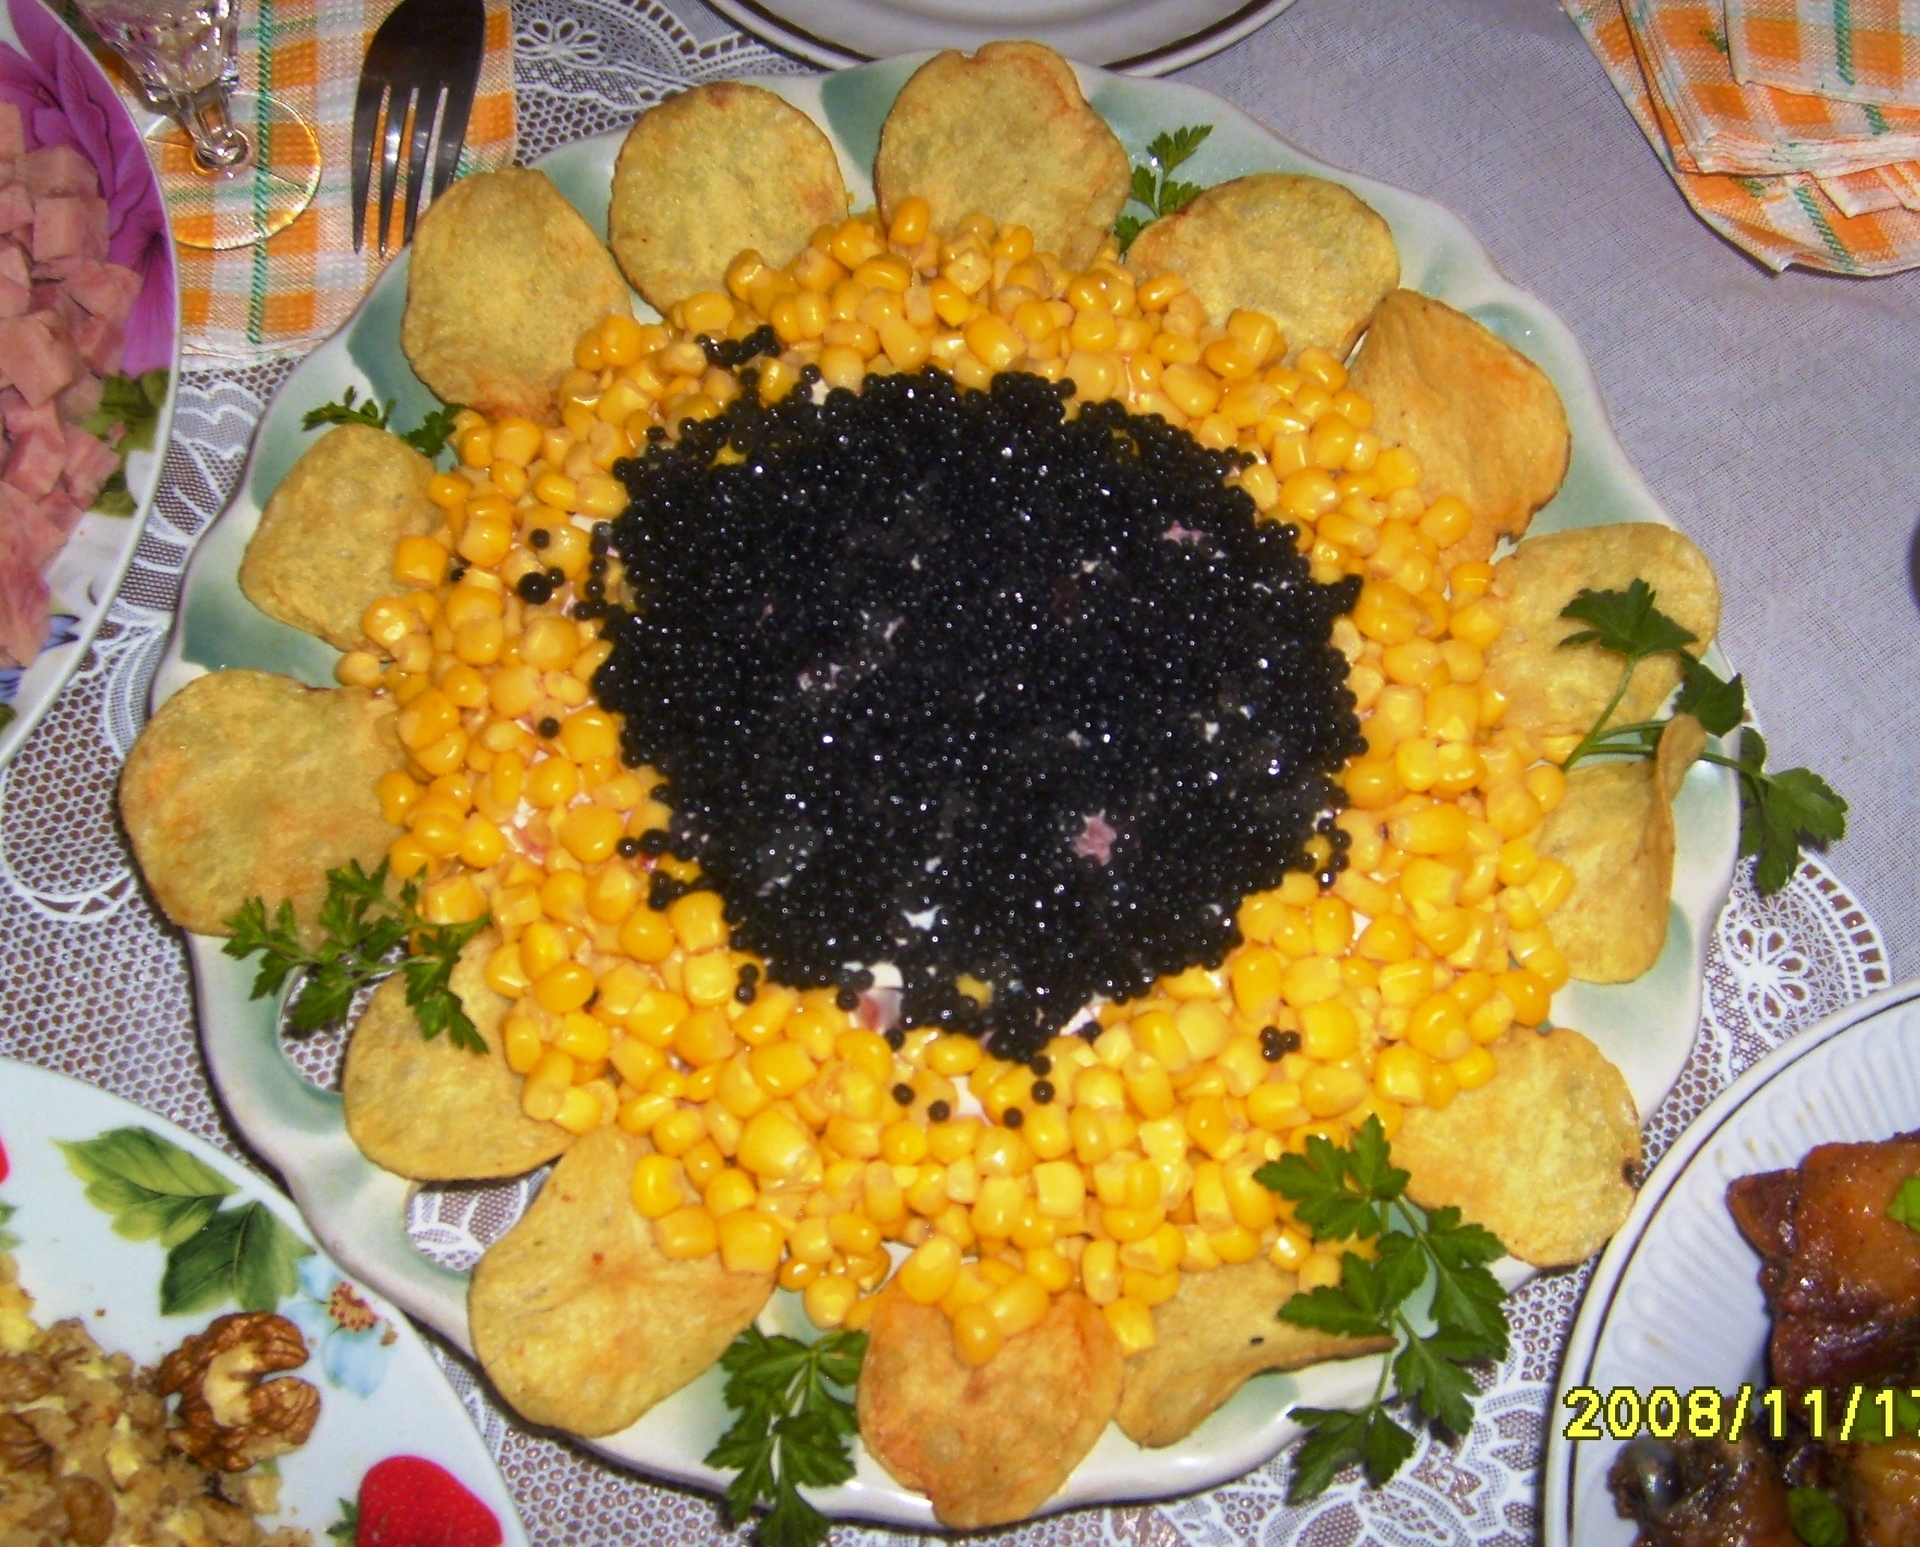 Салат с чипсами и кукурузой - рецепт с фото пошагово